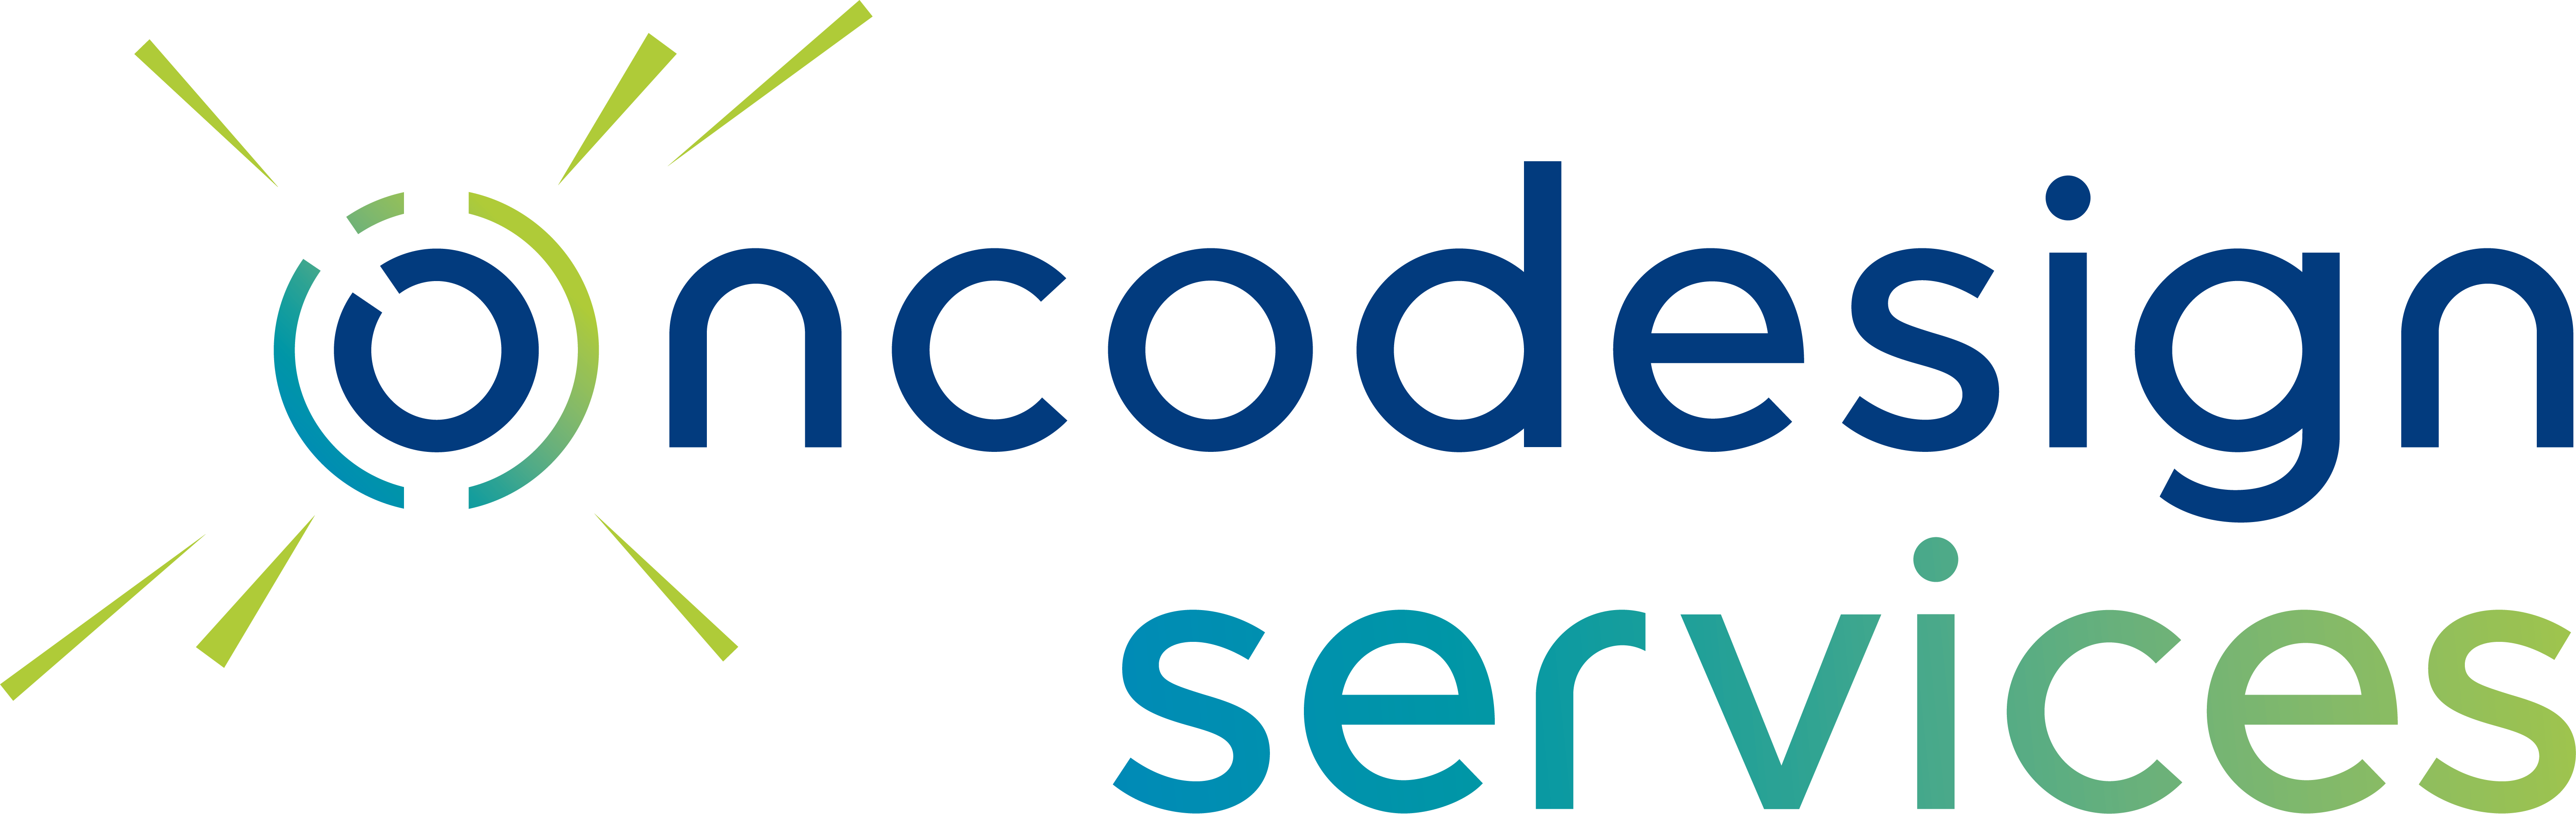 oncodesign logo